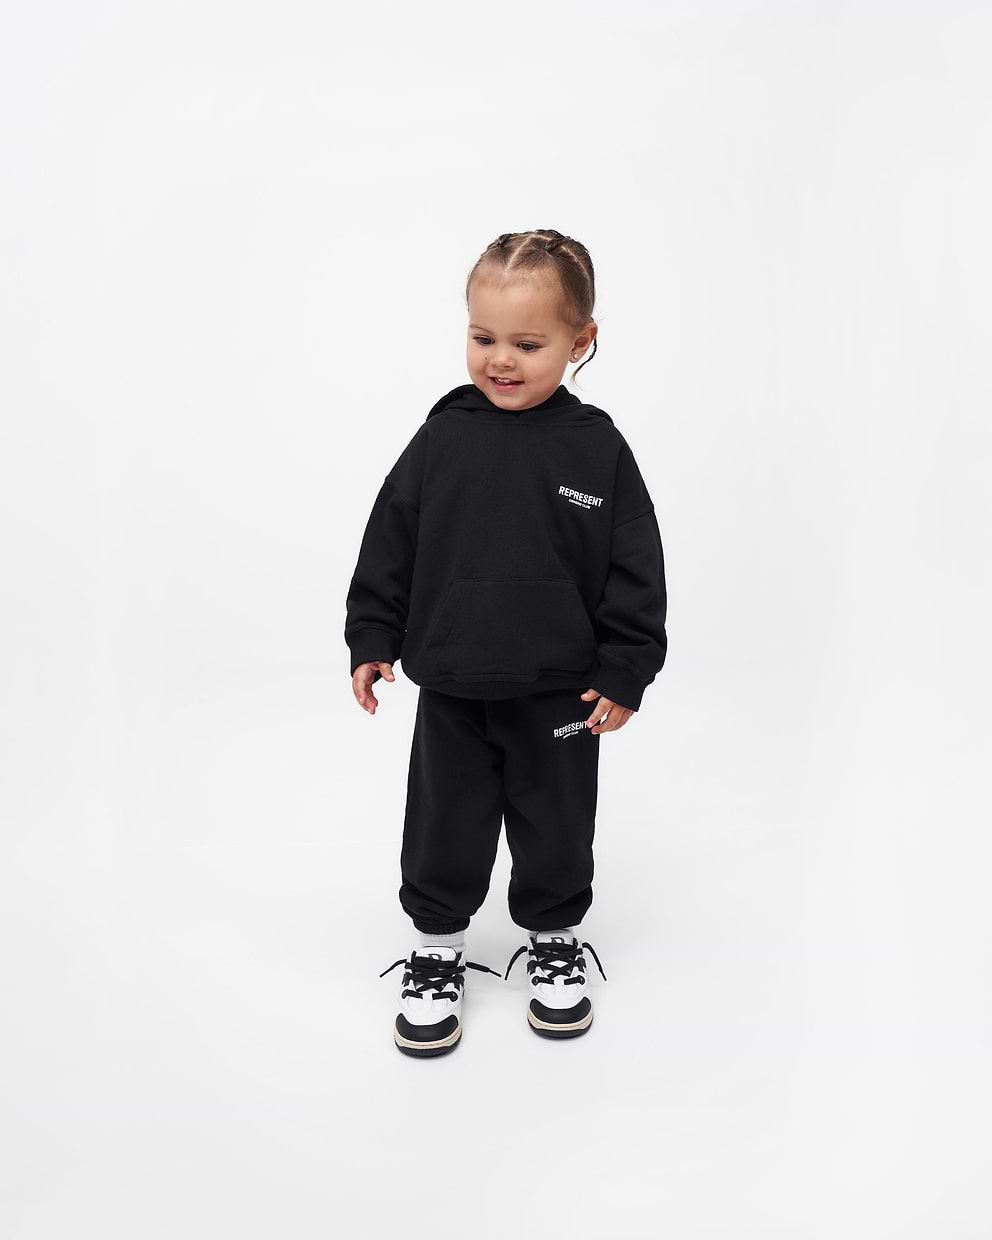 Represent Mini Owners Club Sweatpants - Black